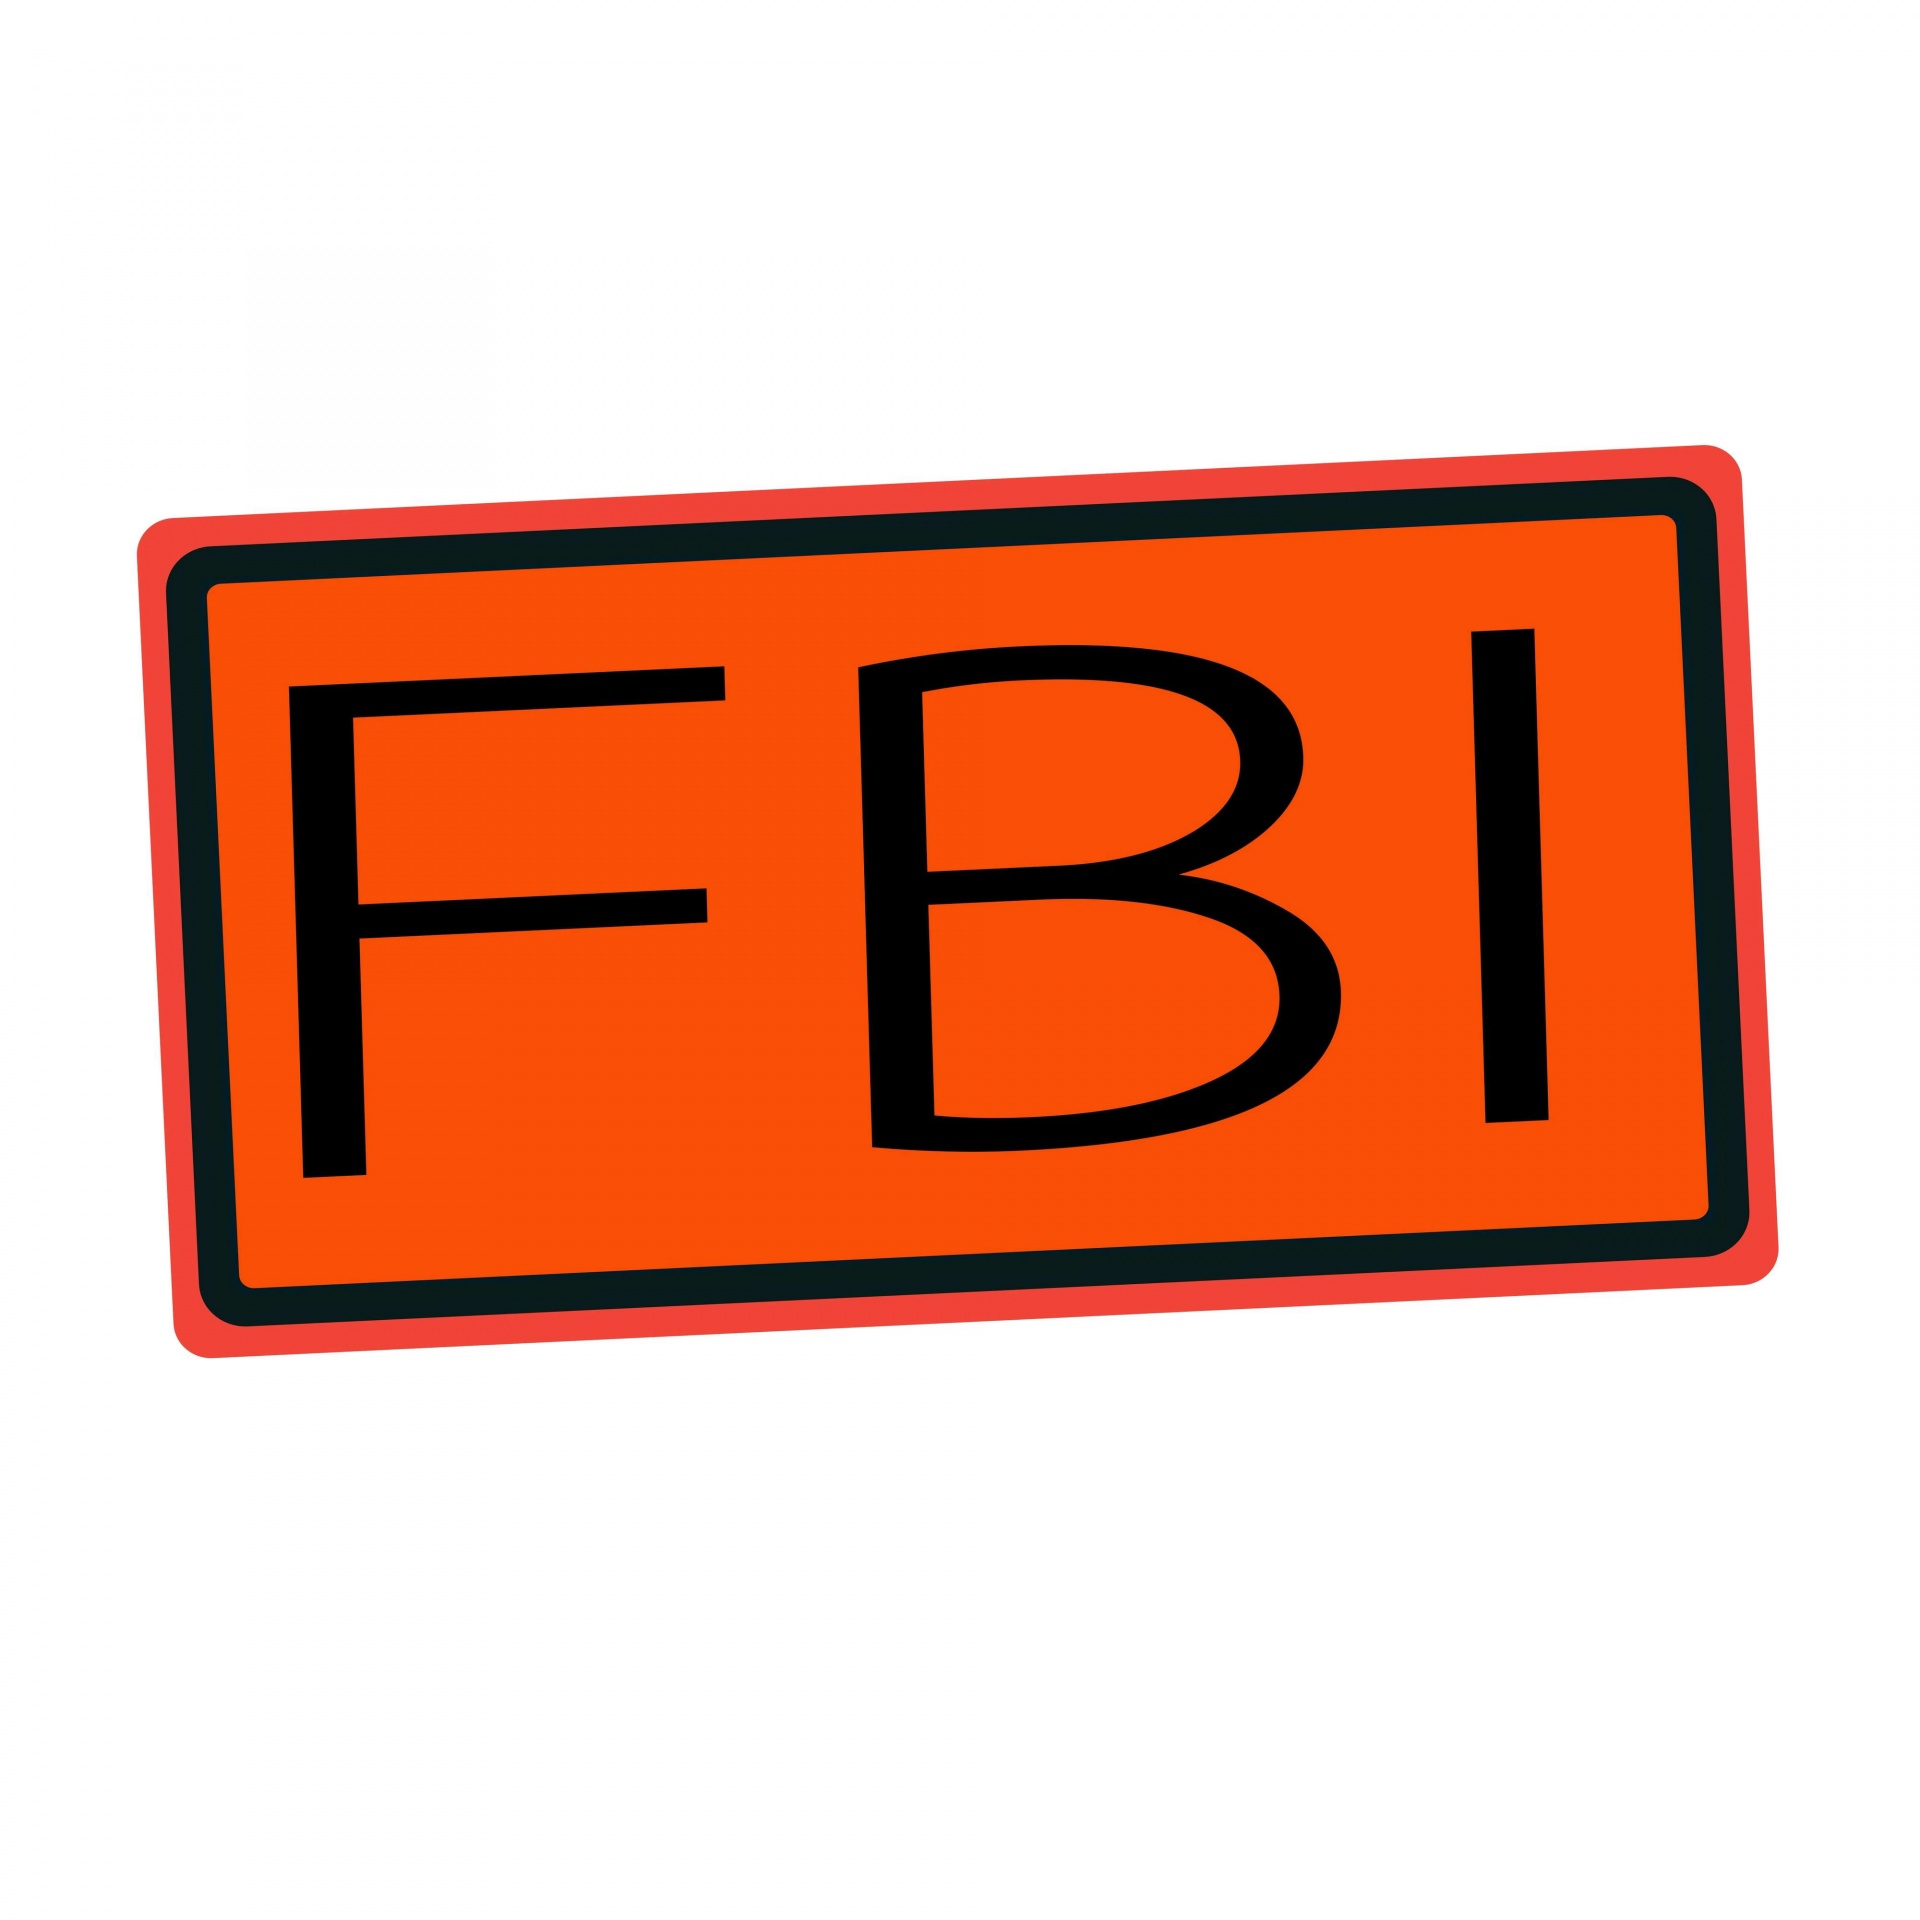 FBI zwarte stempel tekst op oranje